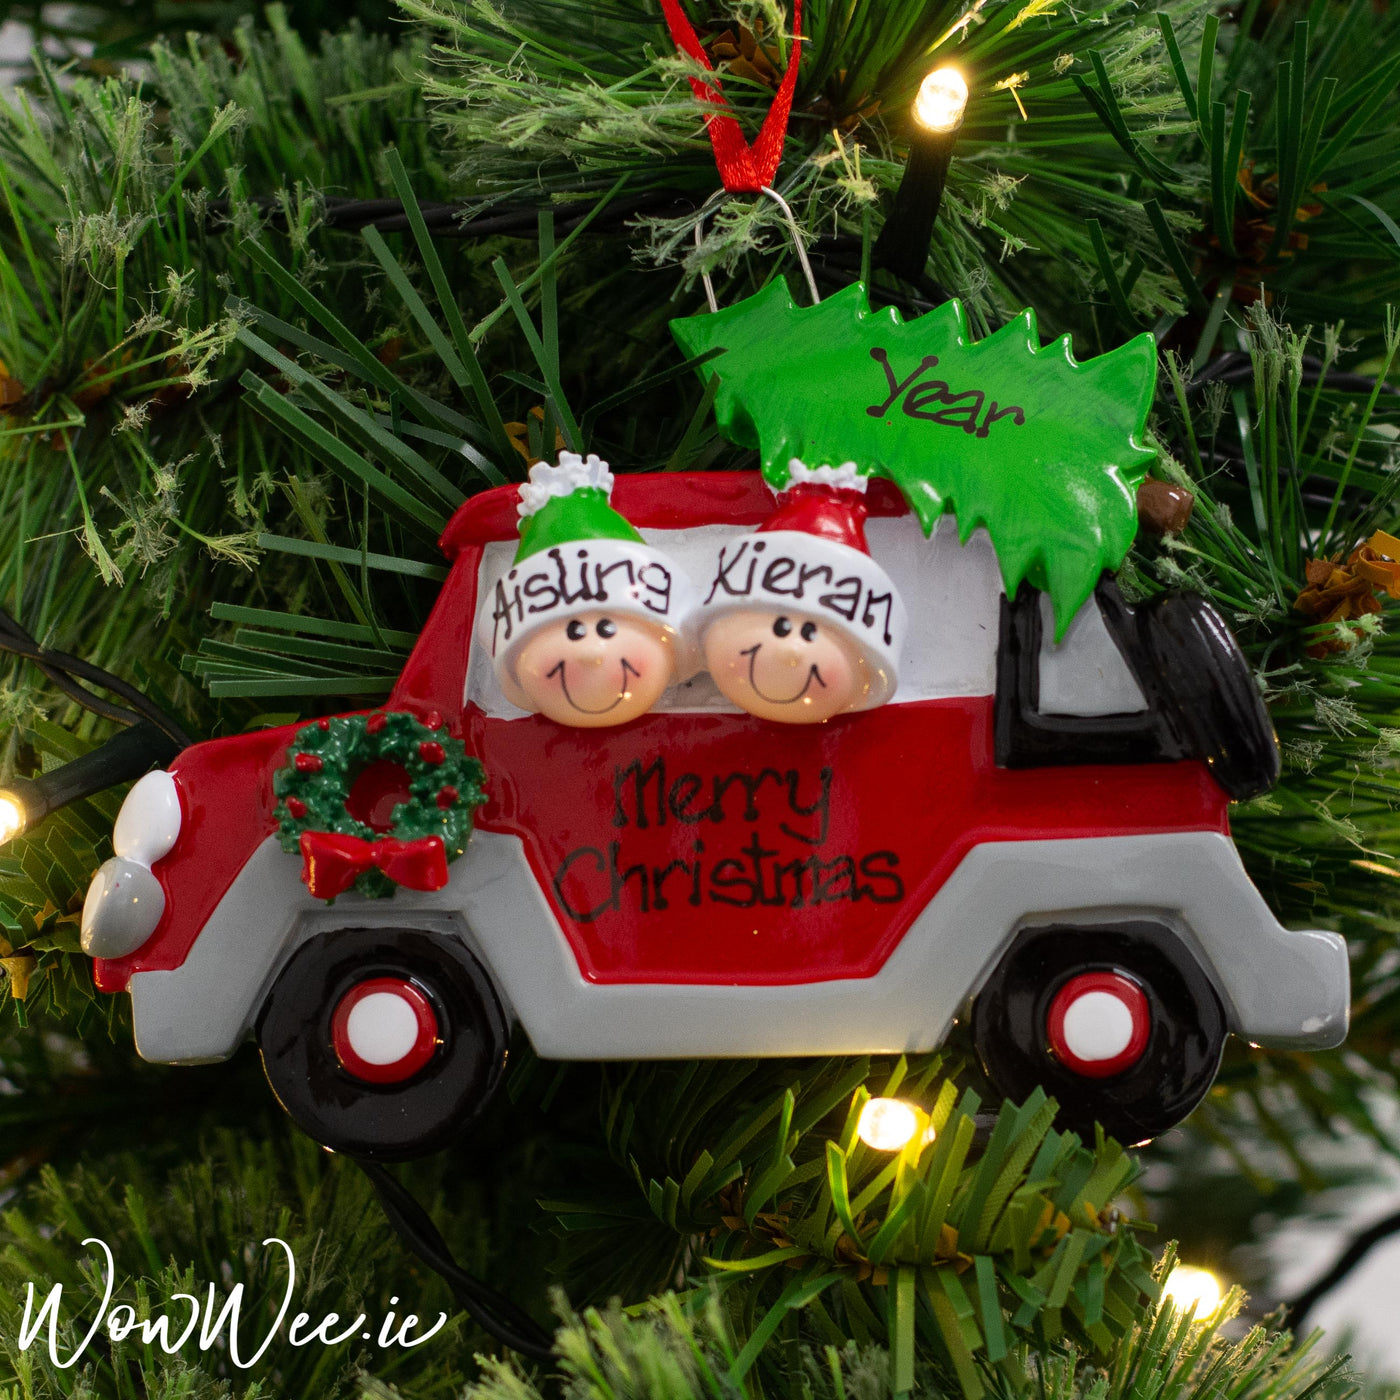 Personalised Christmas Ornaments | Personalised Christmas Ornaments for Couples | Personalised Christmas Decorations | Personalised Christmas Ornaments Ireland | WowWee.ie